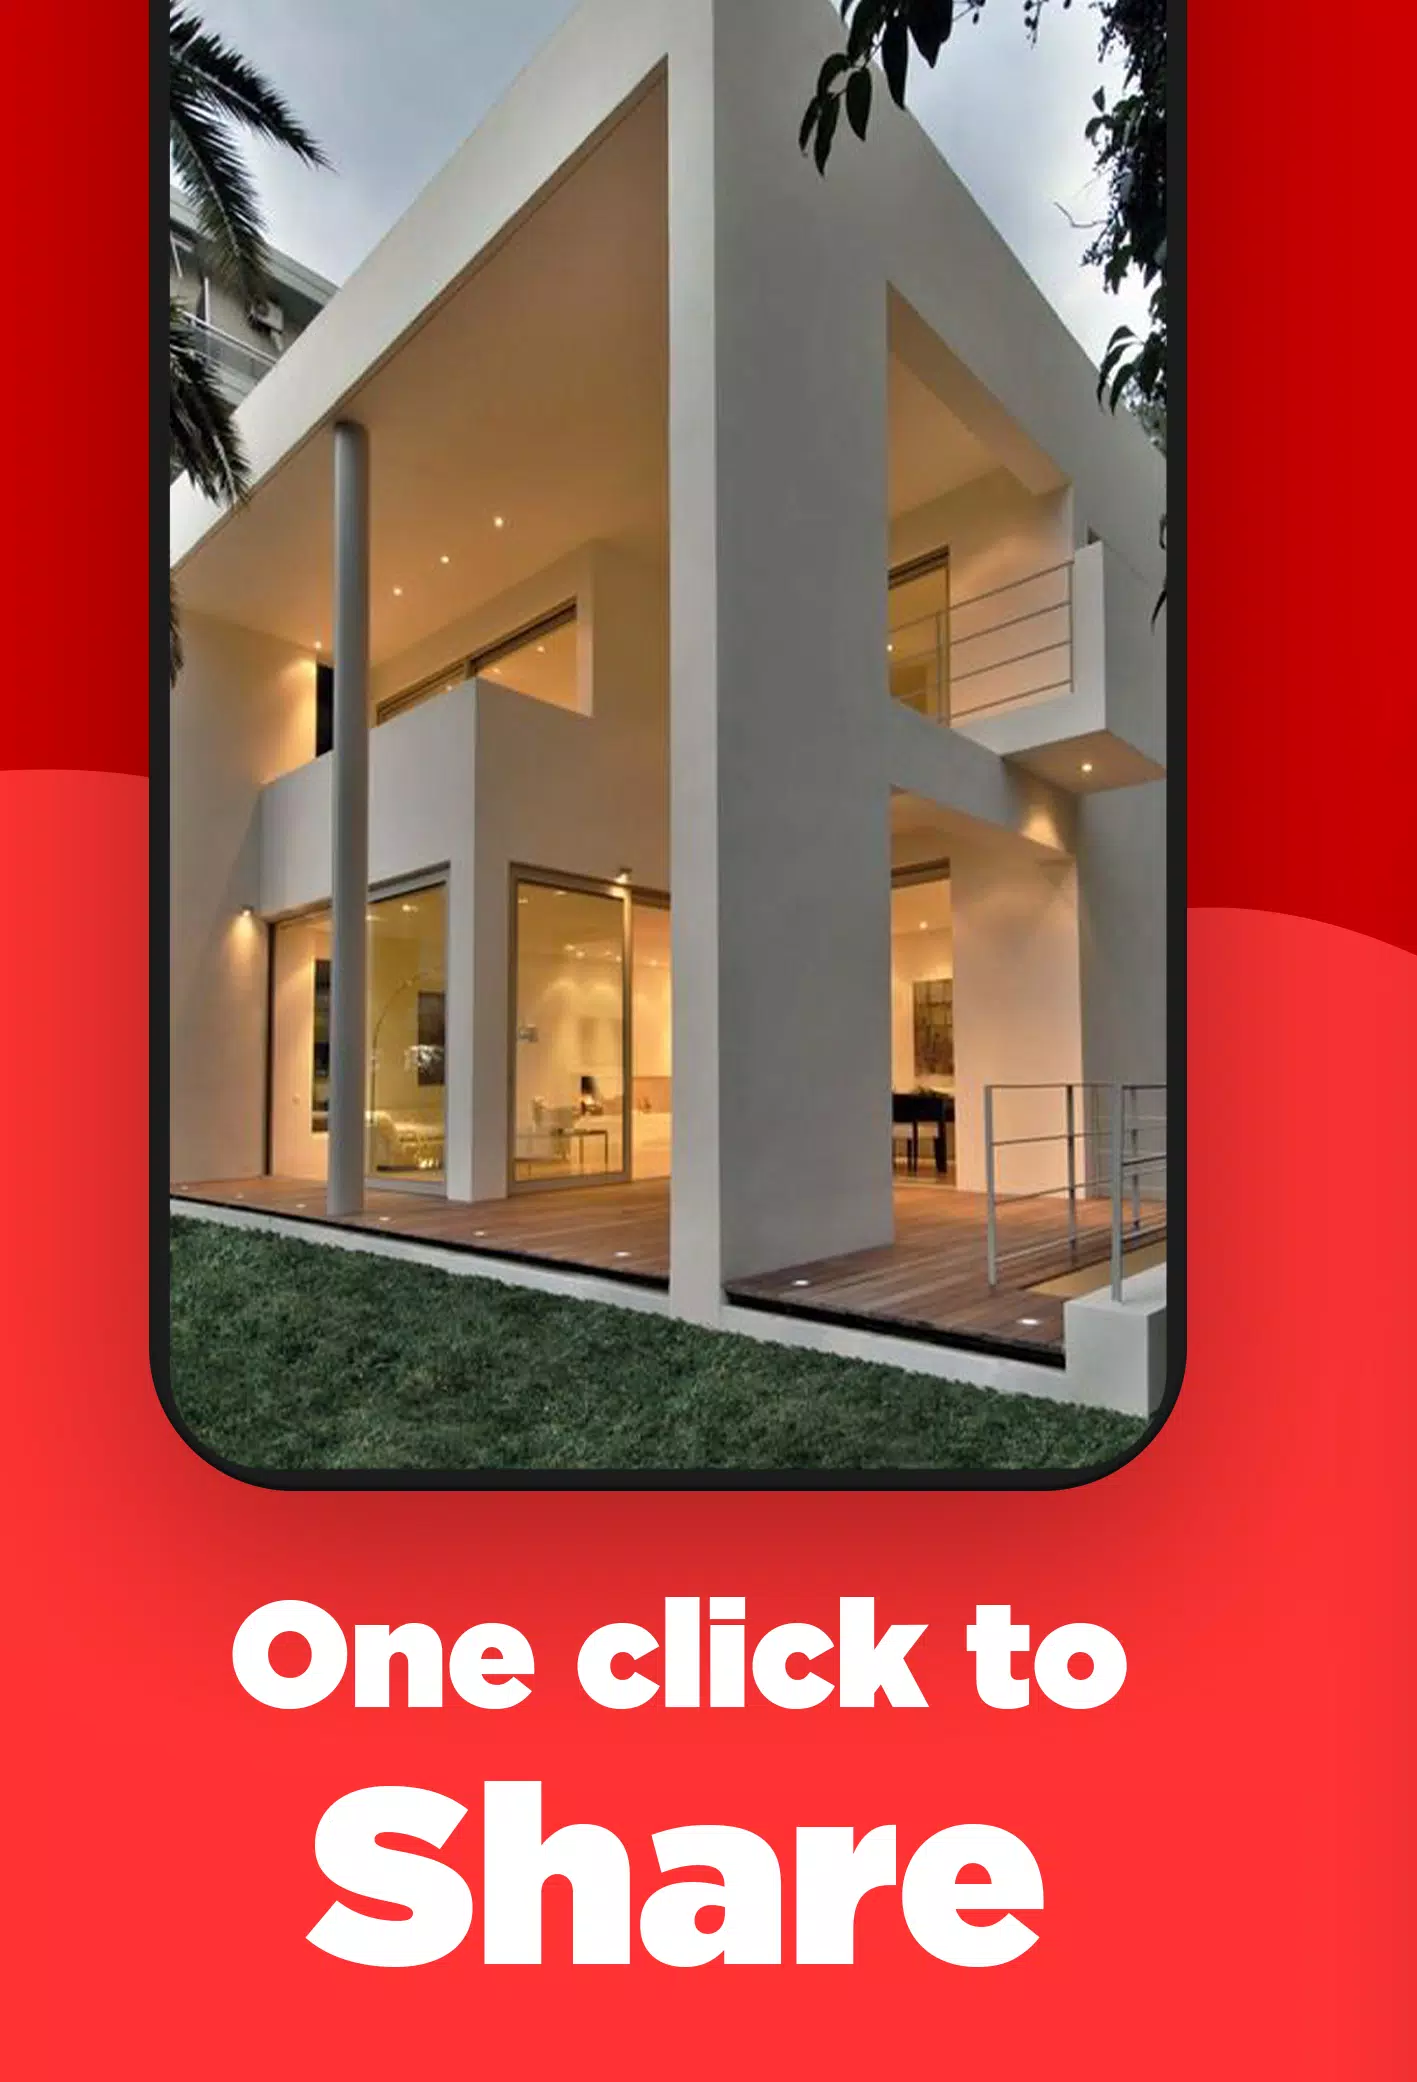 Download do APK de Bloxburg House Ideas para Android